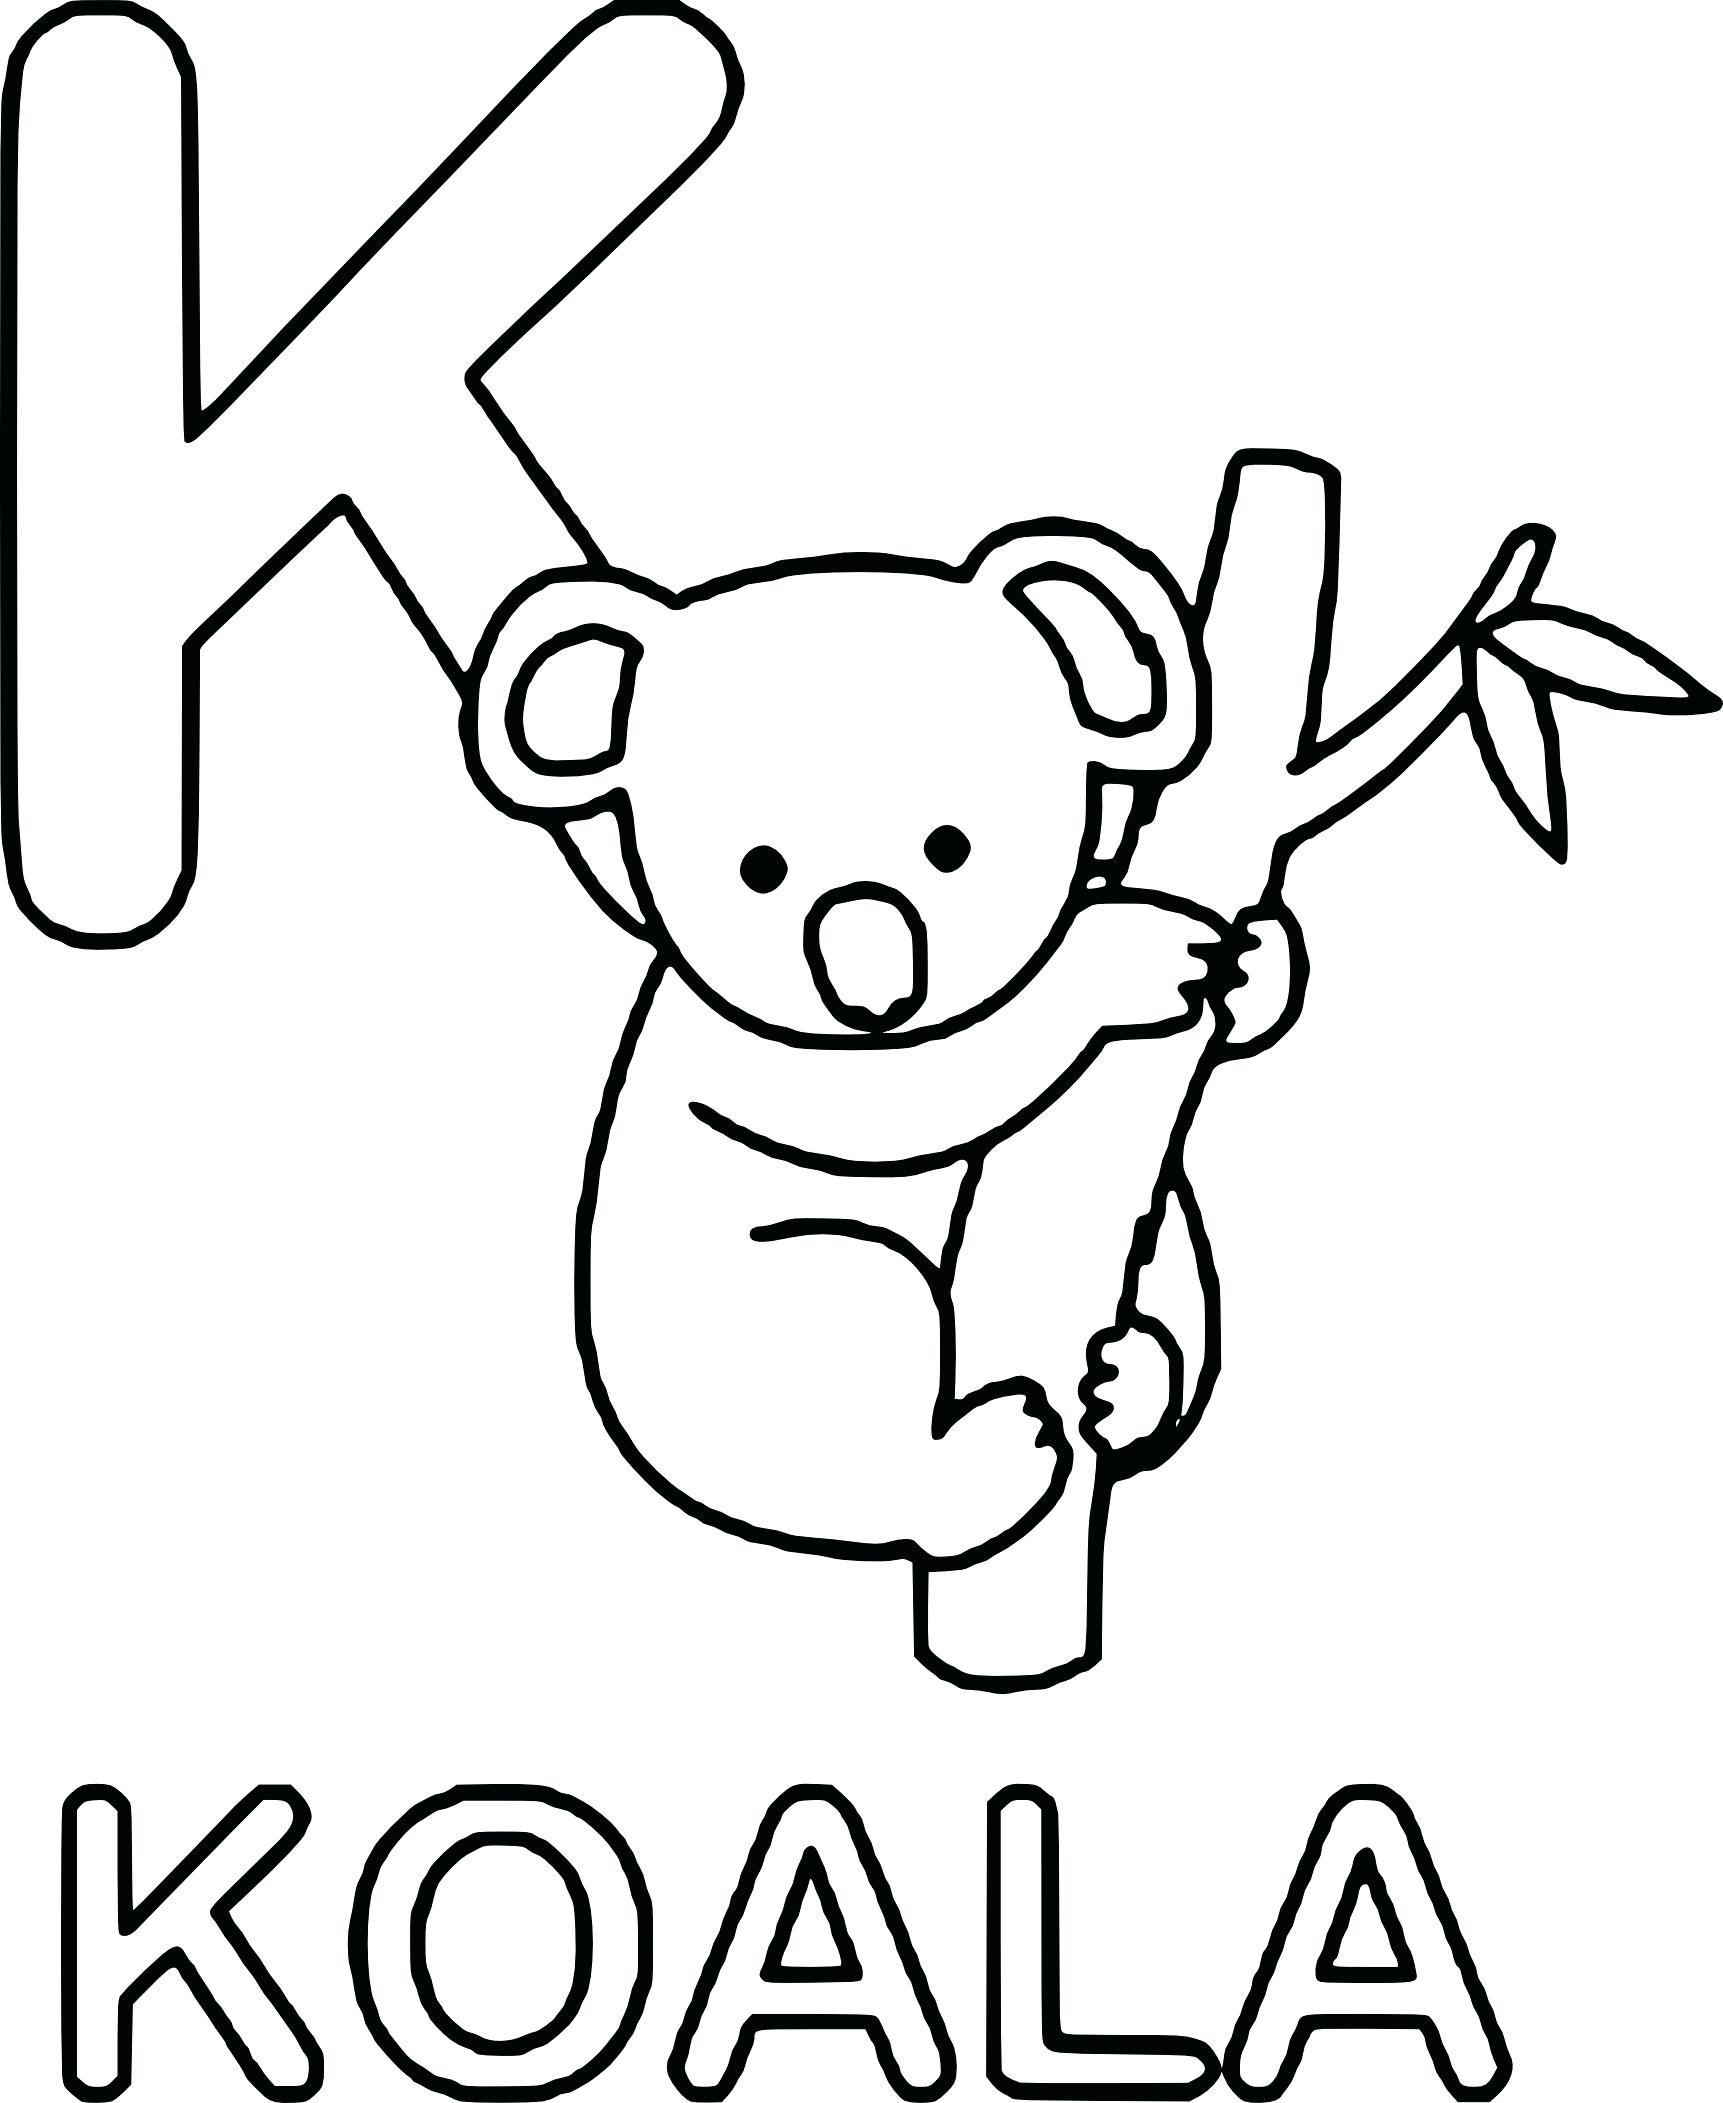 Coloring Pages : Coloring Book Koala Brothersg Meltingclock Free ...